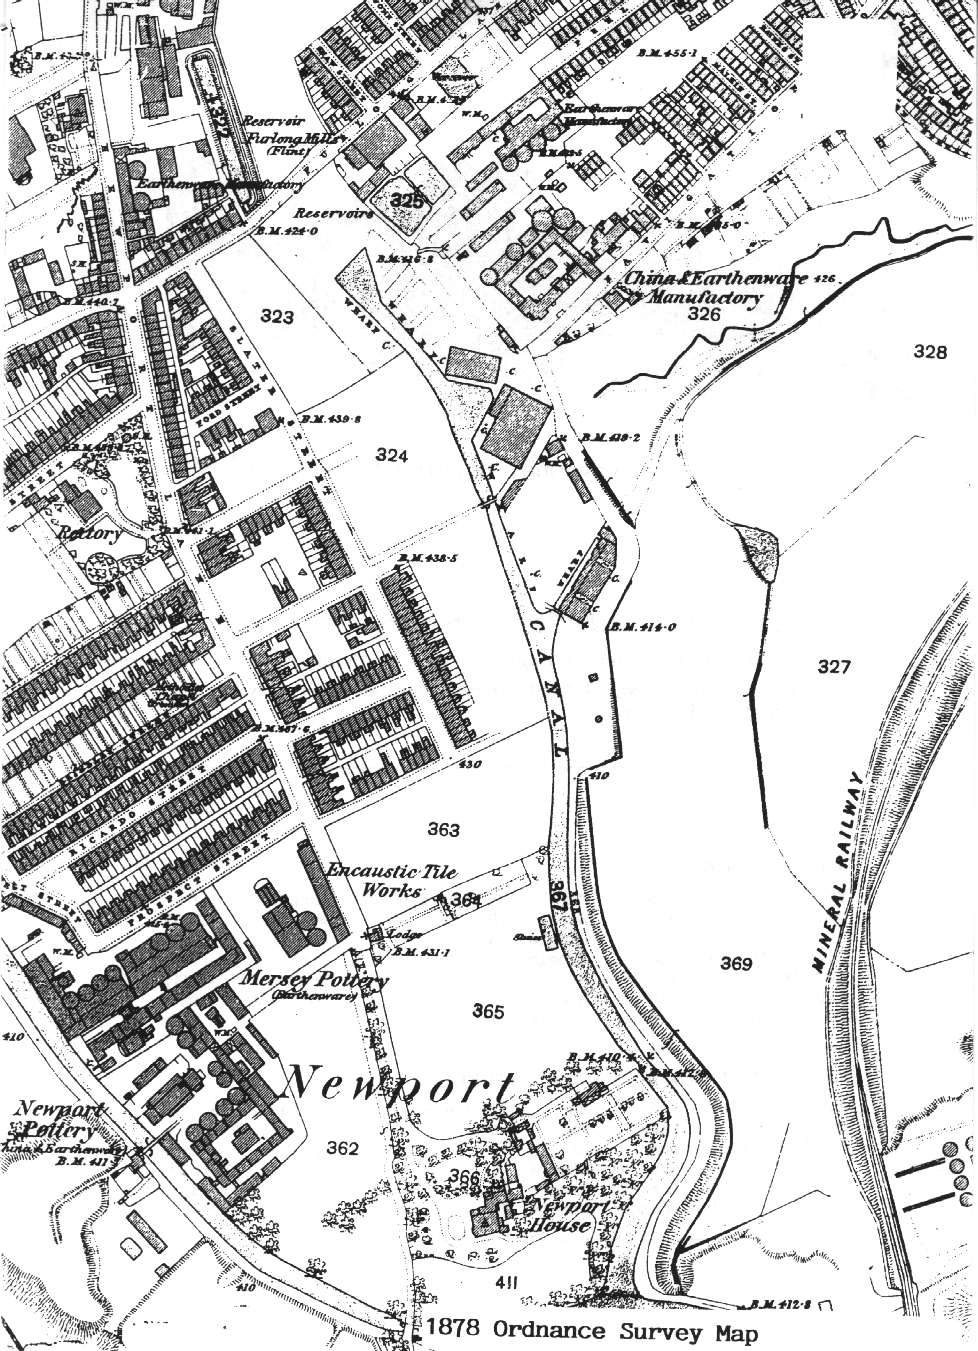 1878 Ordnance Survey Map of the Burslem Branch Canal area